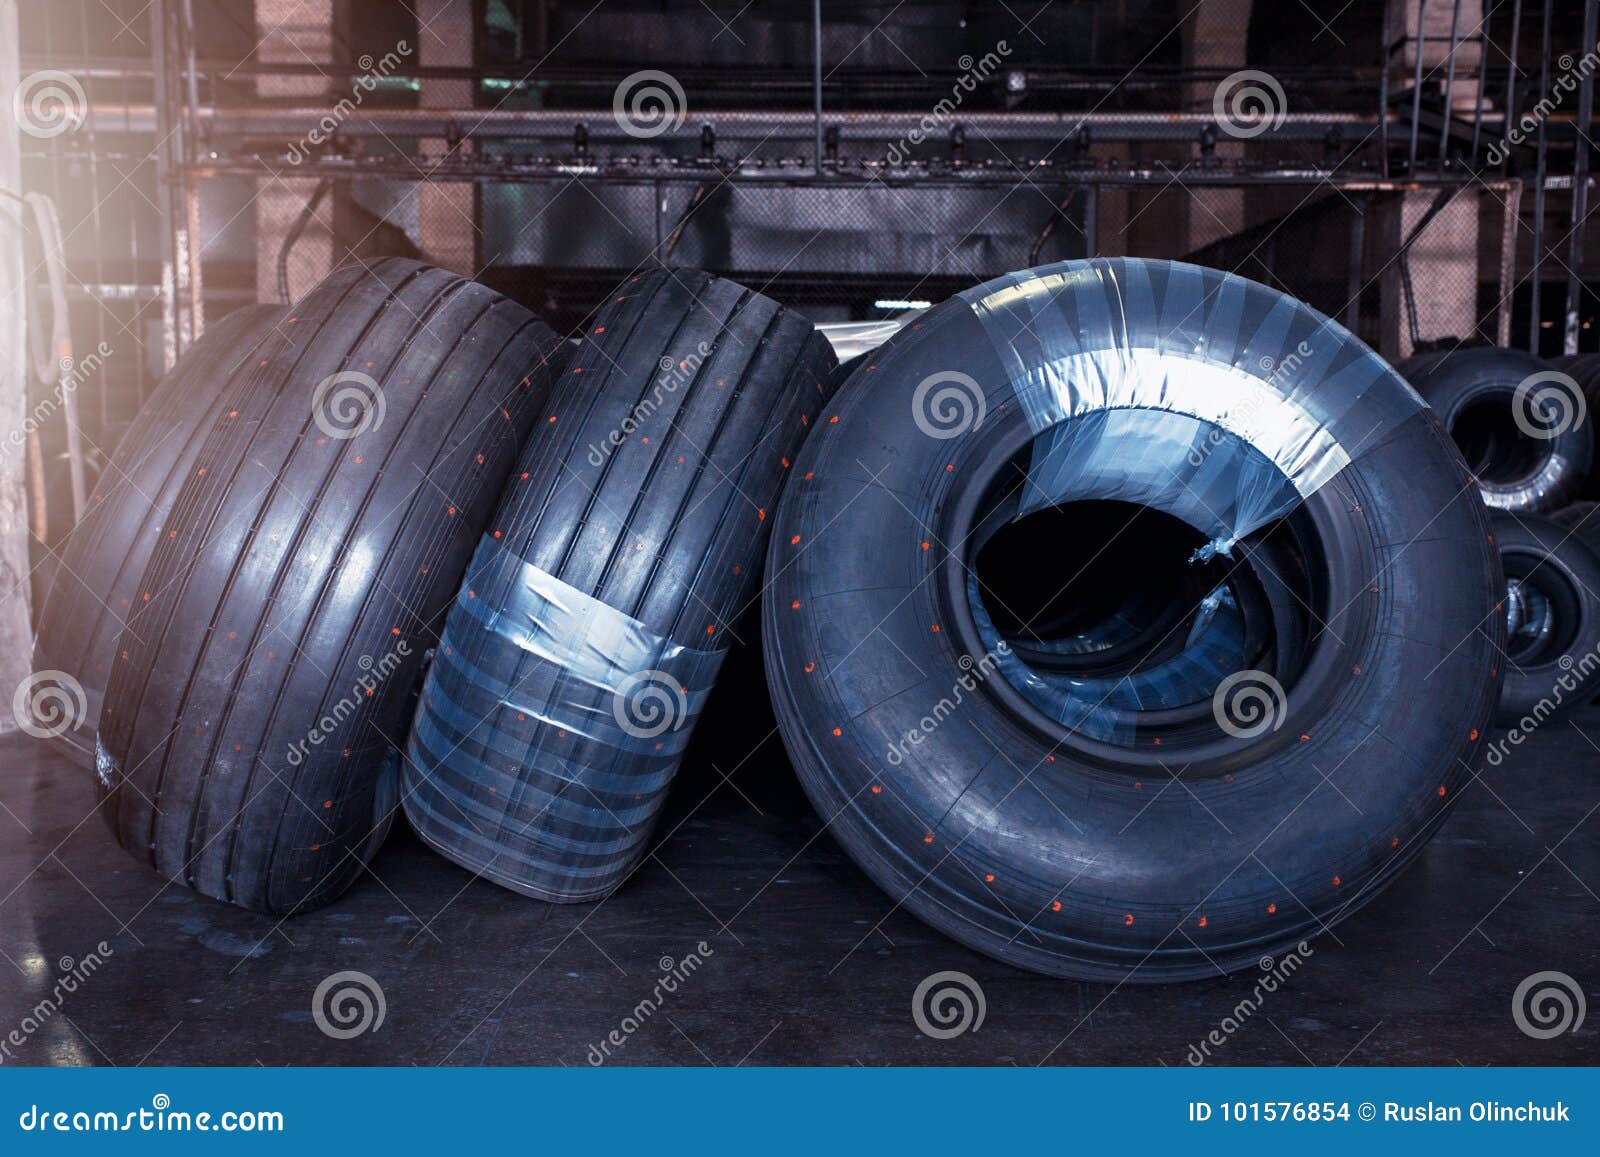 avia tires production